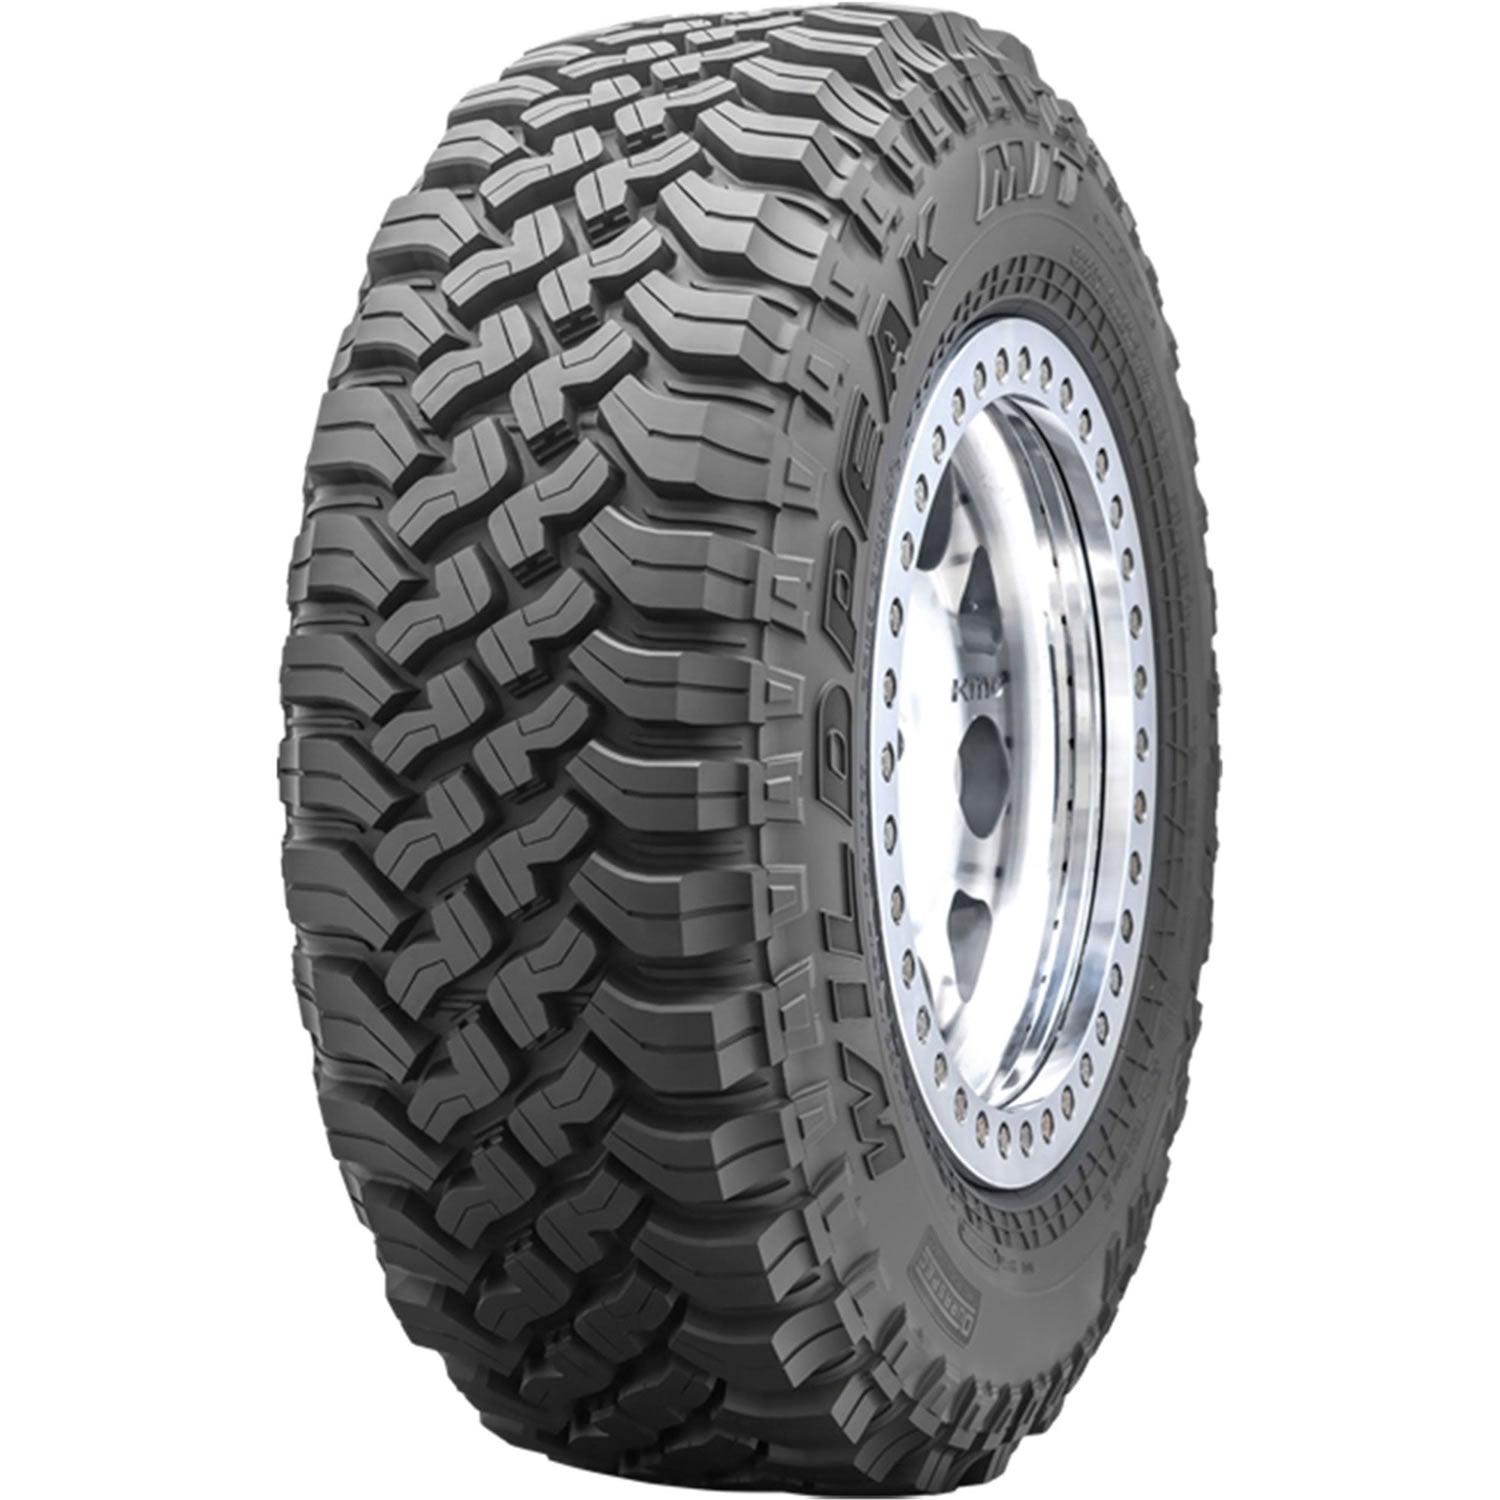 FALKEN WILDPEAK MT LT285/65R18 (32.8X9.1R 18) Tires